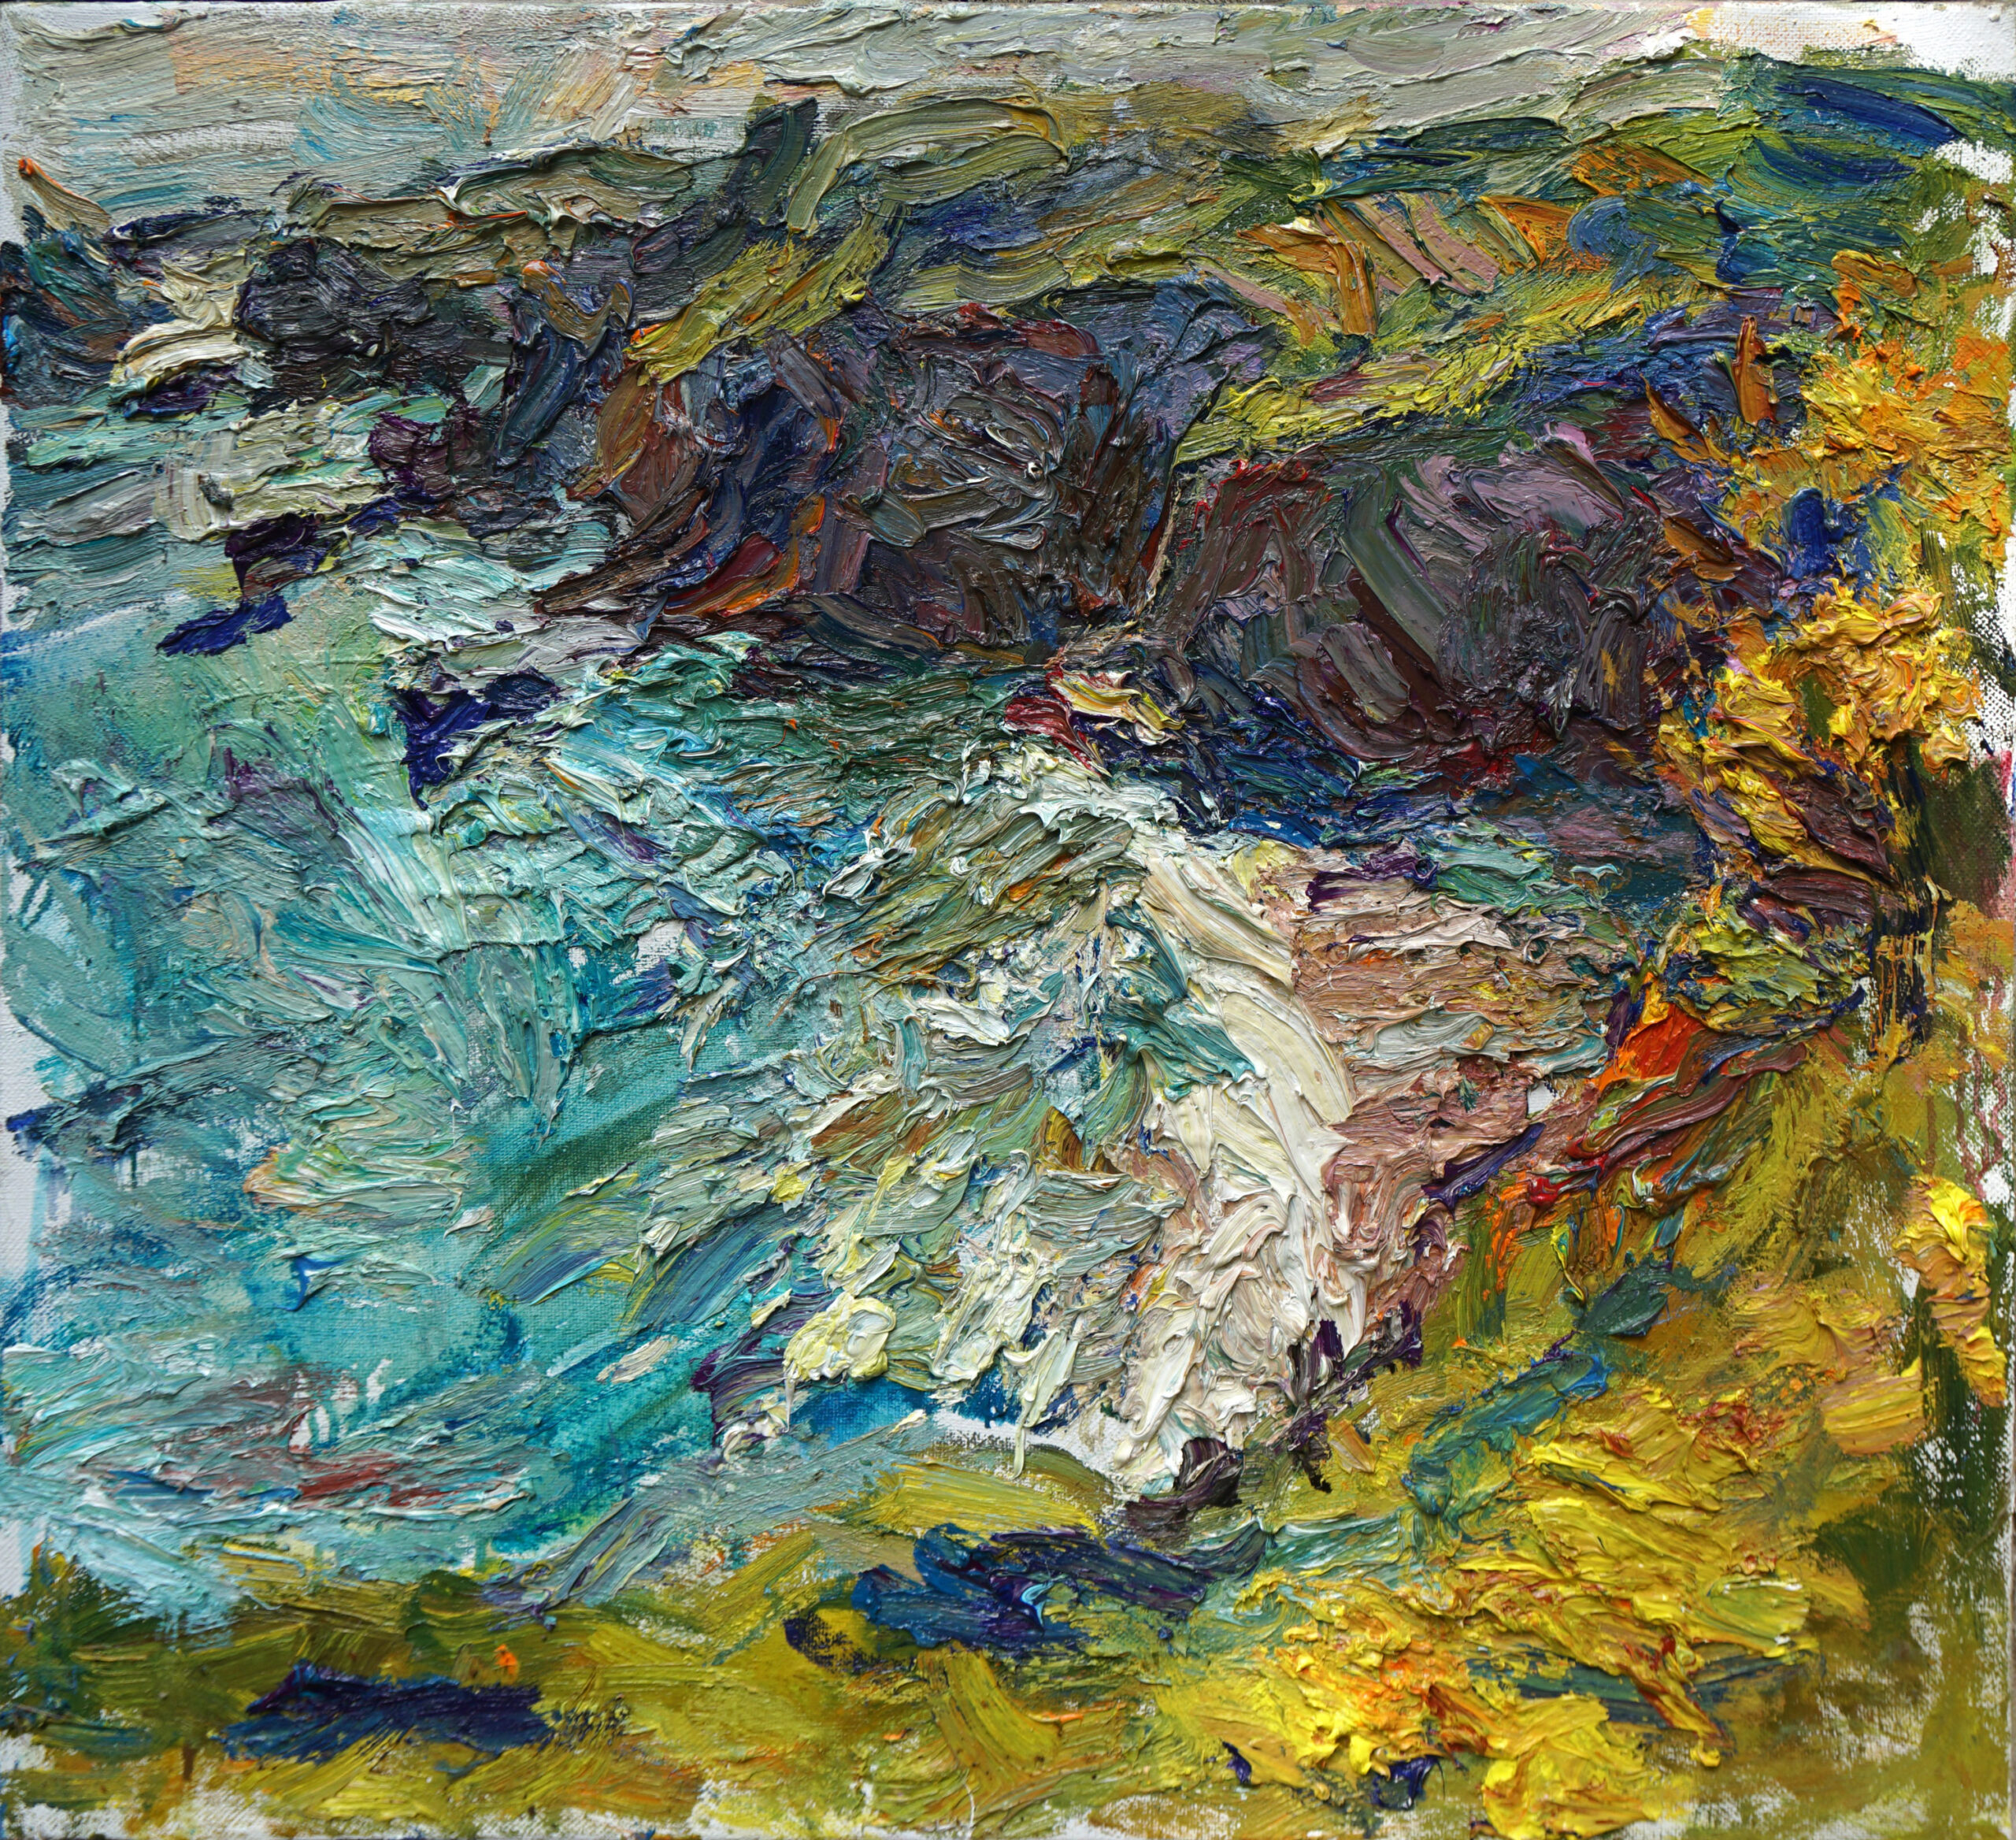 Ulrich Gleiter, "Bay of Penharn," 2023, Oil on linen, 28 x 30 in.